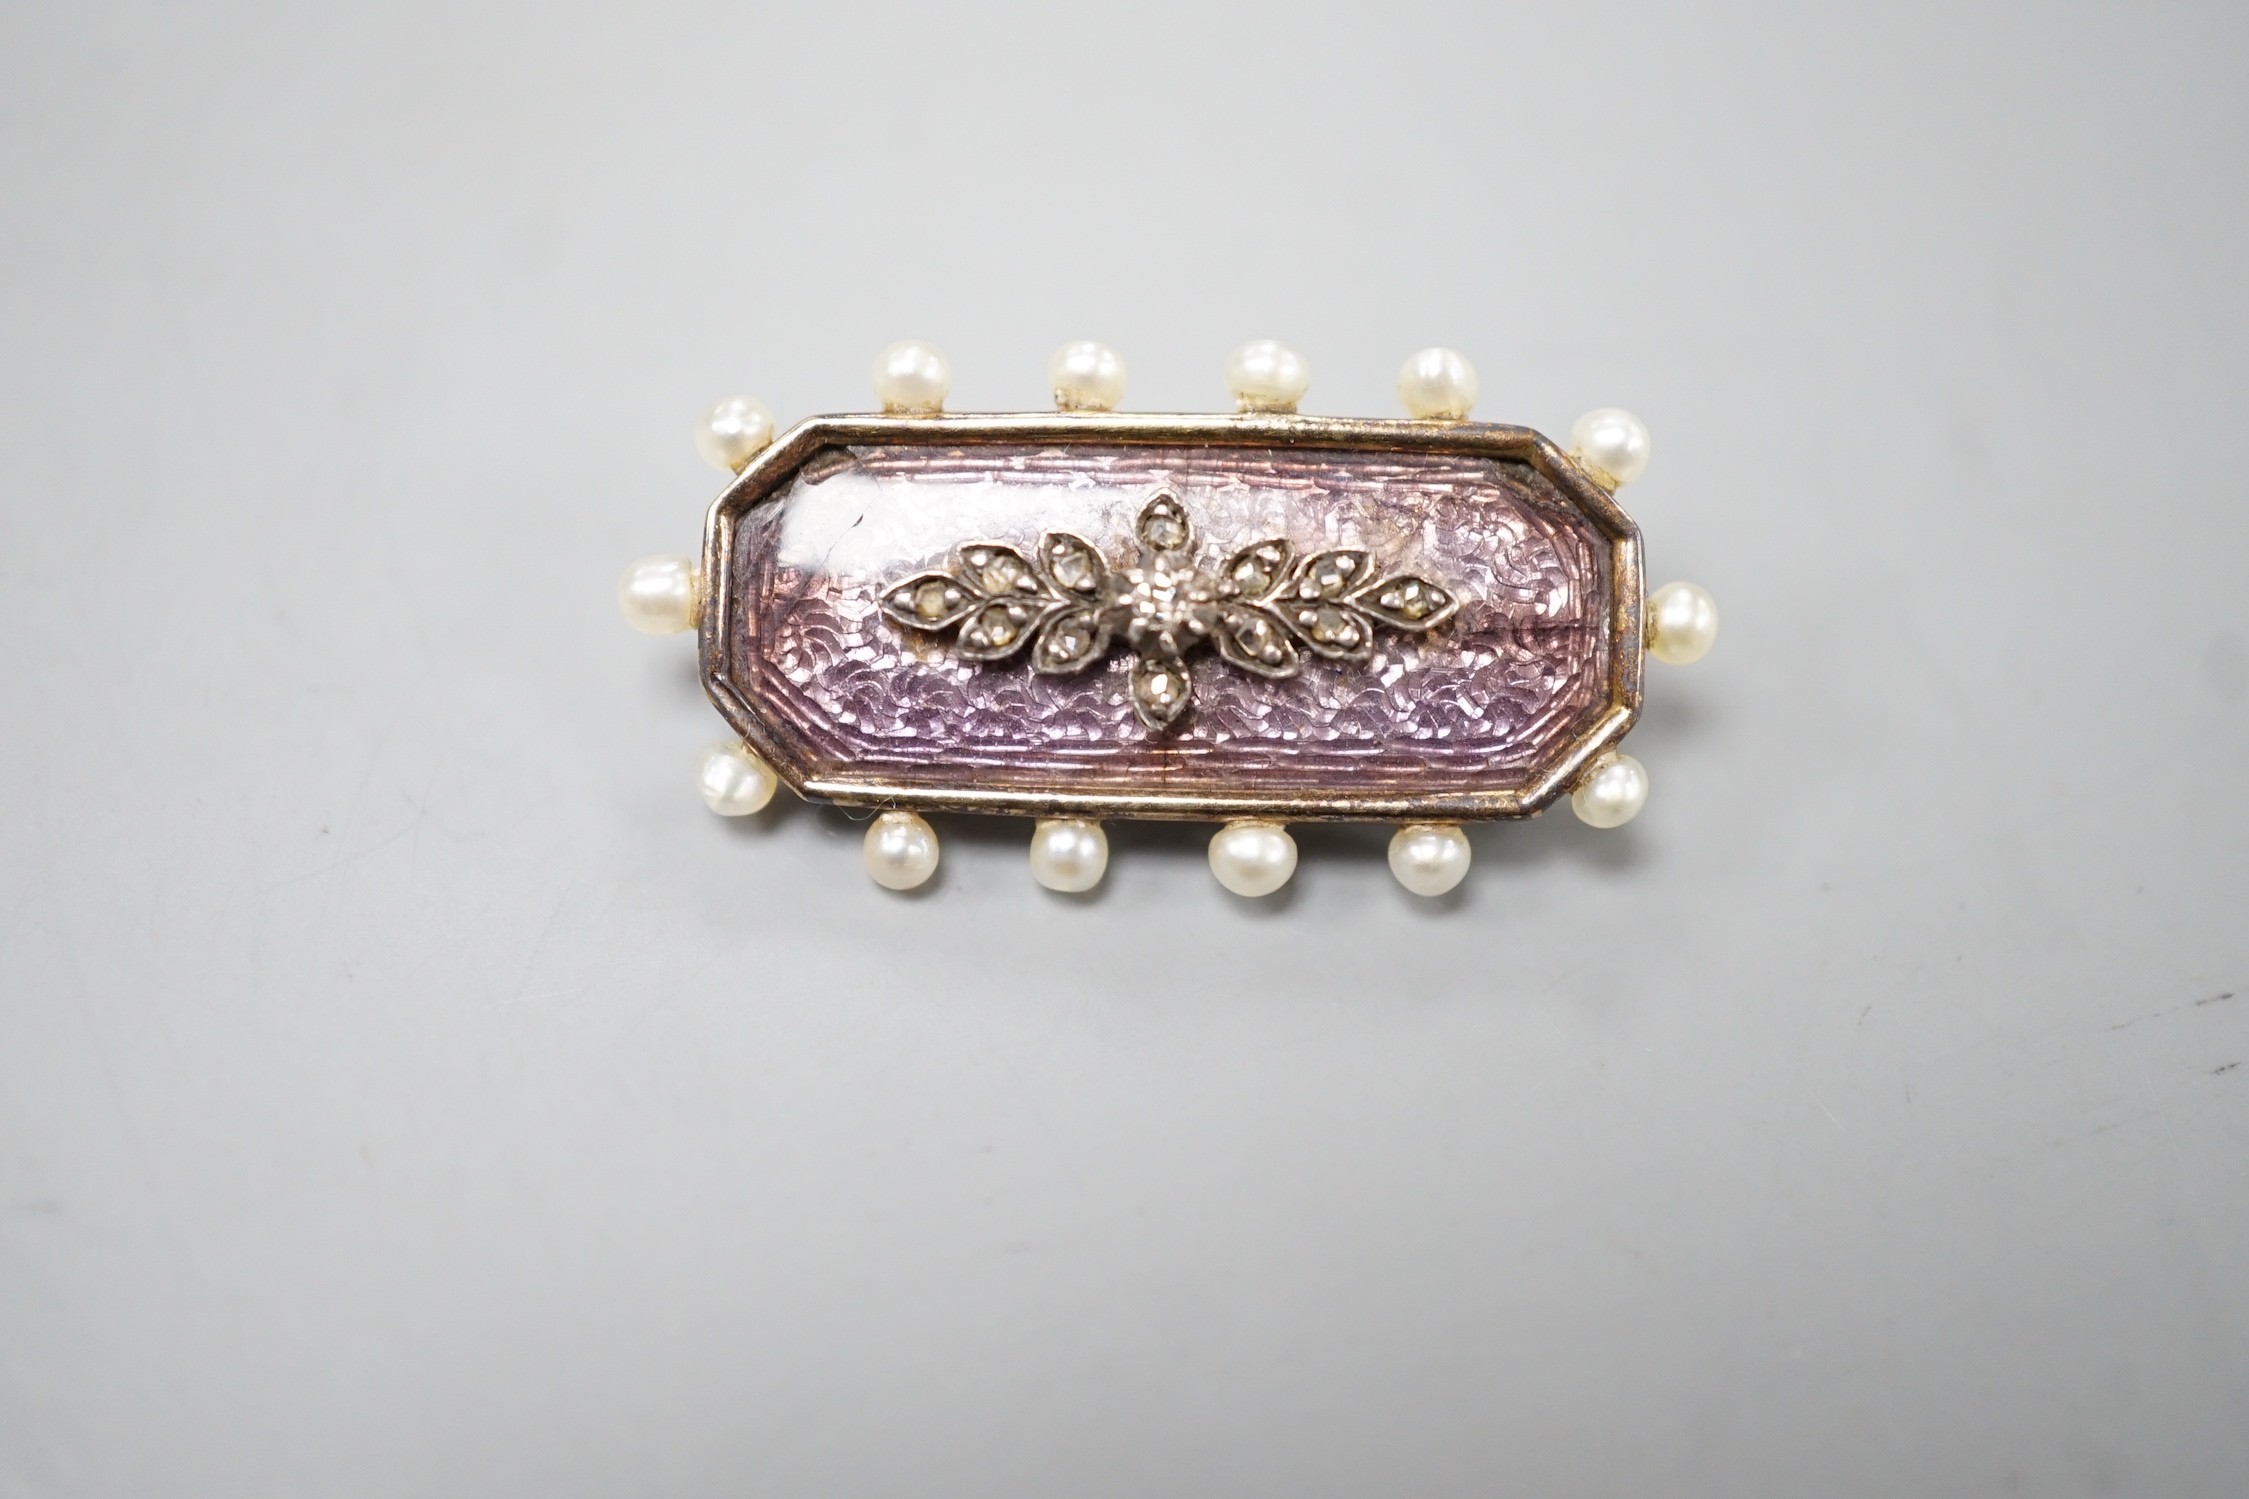 An Edwardian yellow metal, seed pearl, diamond and enamel set brooch, 31m, gross weight 5.4 grams.